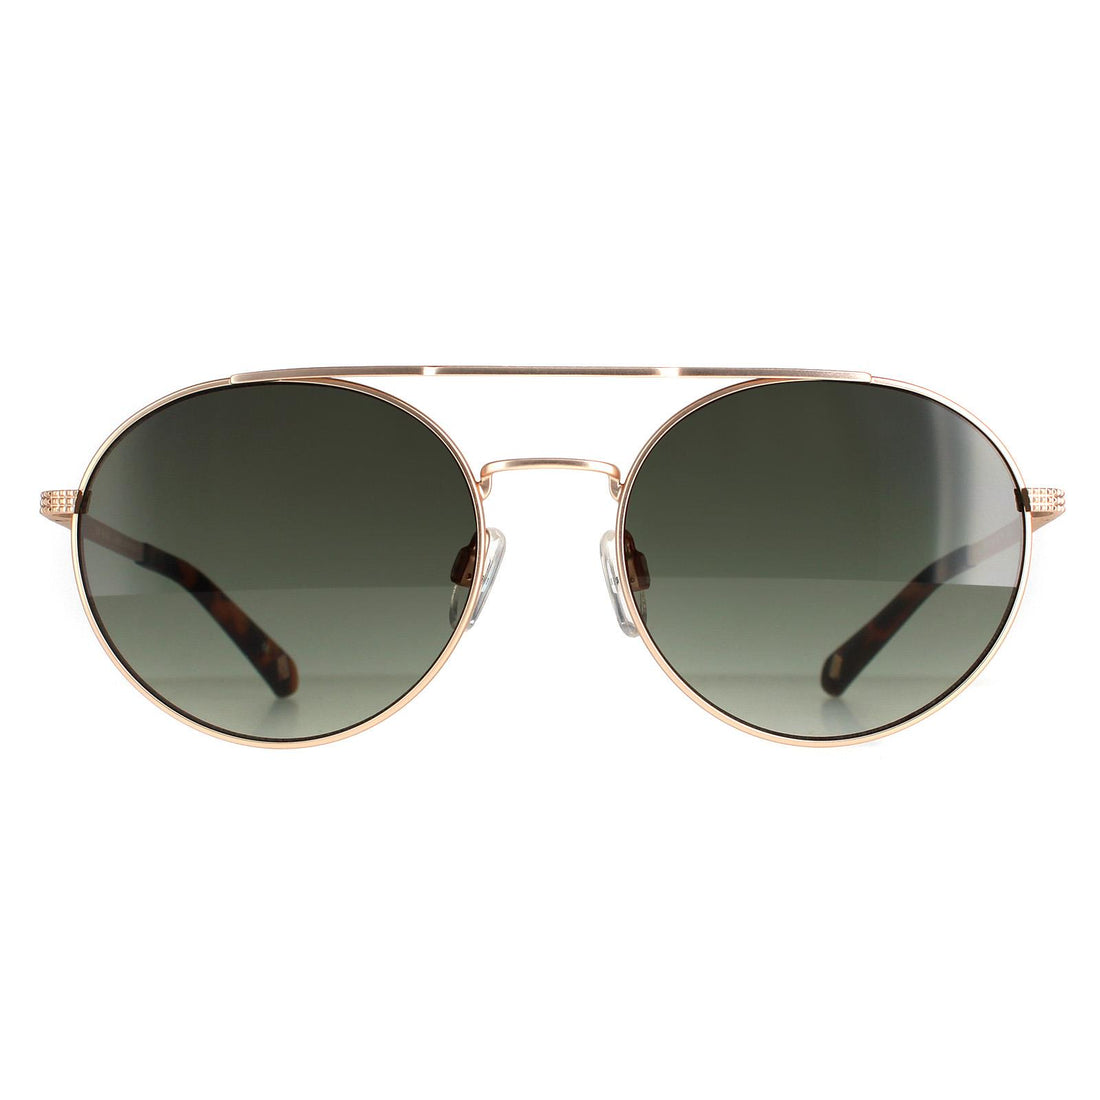 Ted Baker TB1531 Warner Sunglasses Gunmetal Grey Dark Green Gradient